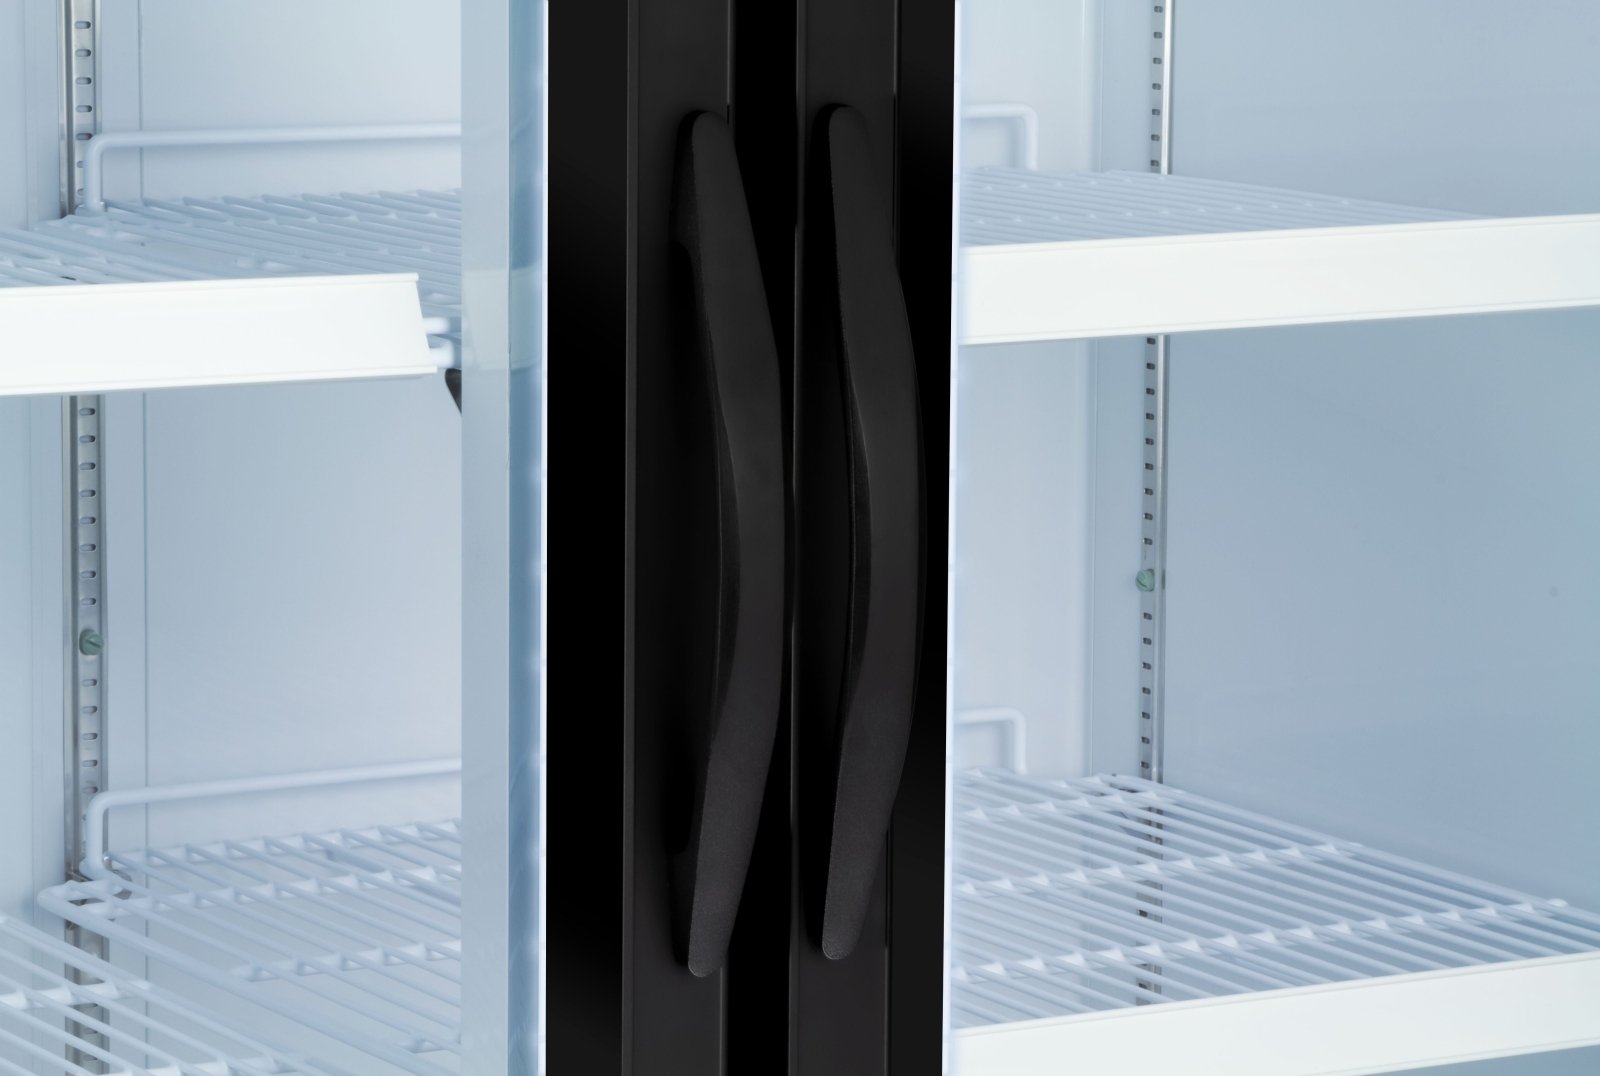 Maxx Cold MXM3 - 72FHC X - Series Triple Glass Door Merchandiser Freezer, Free Standing, 81"W, 72 cu. ft. Storage Capacity, in White - TheChefStore.Com